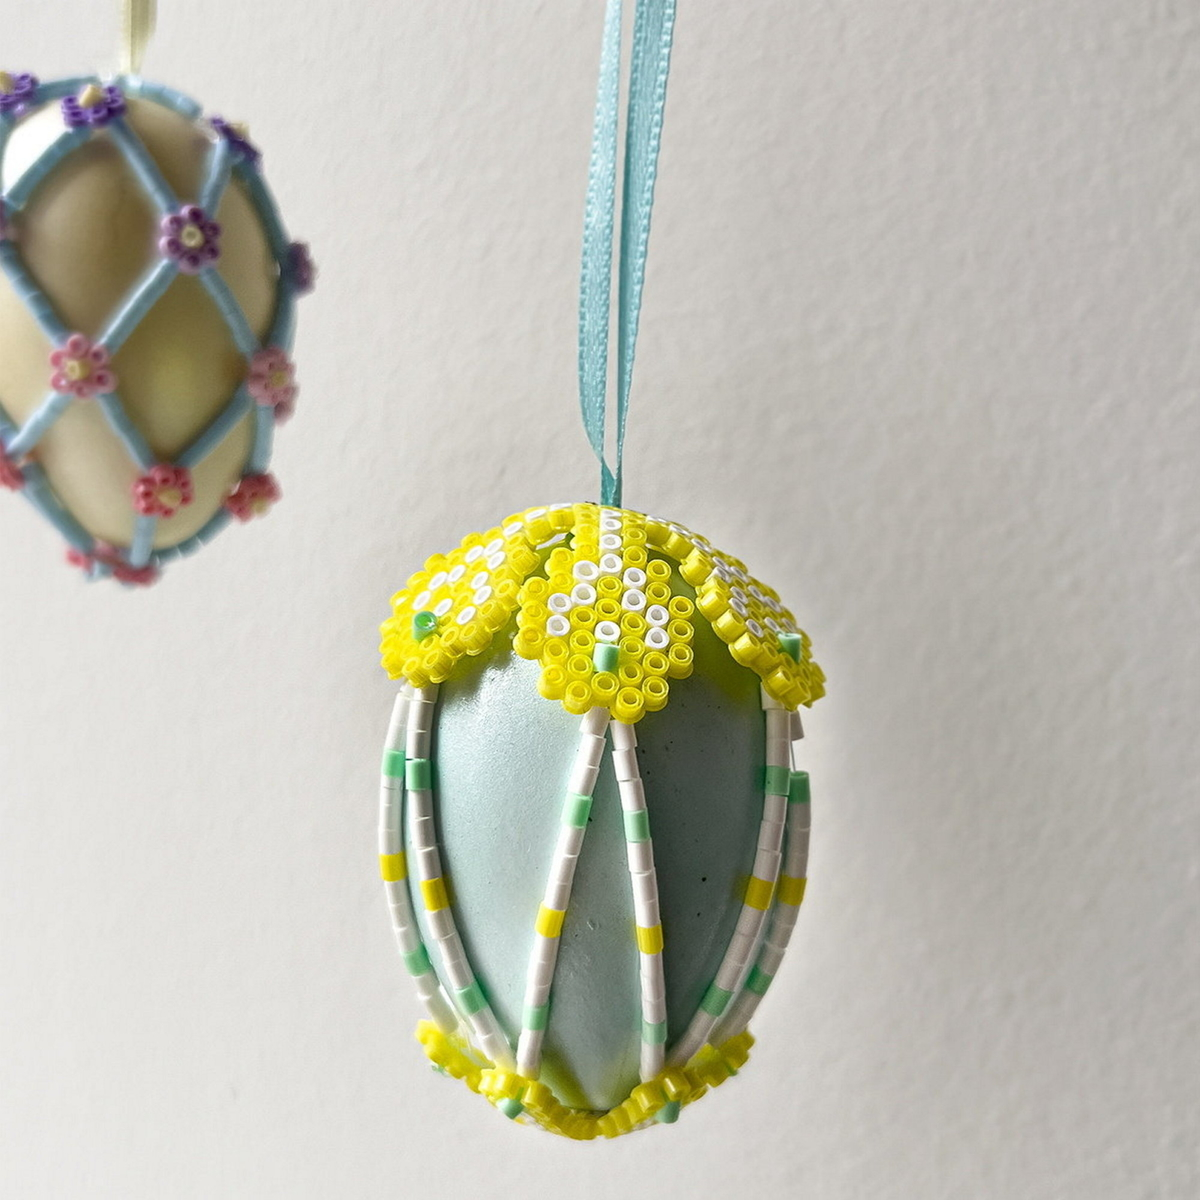 Bead net for eggs made of Hama beads